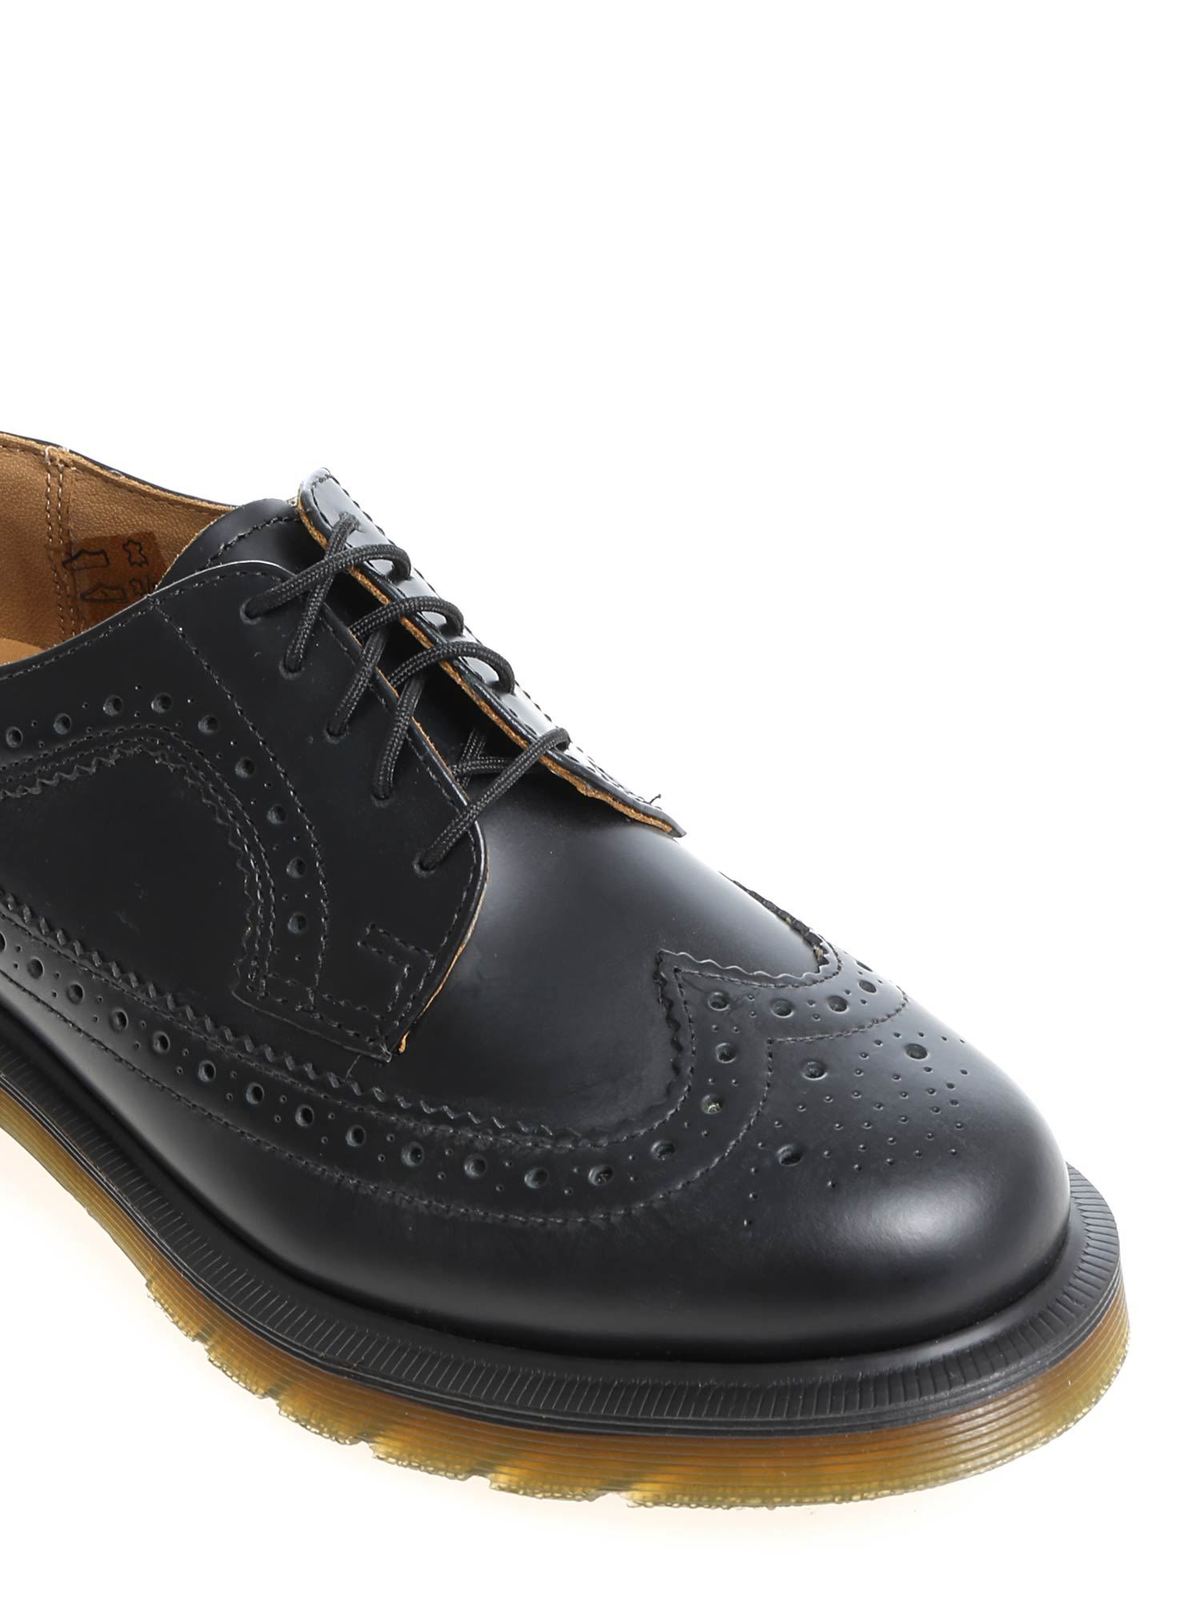 Overname Invloedrijk morgen Lace-ups shoes Dr. Martens - 3989 Smooth black derby brogue - 13844001